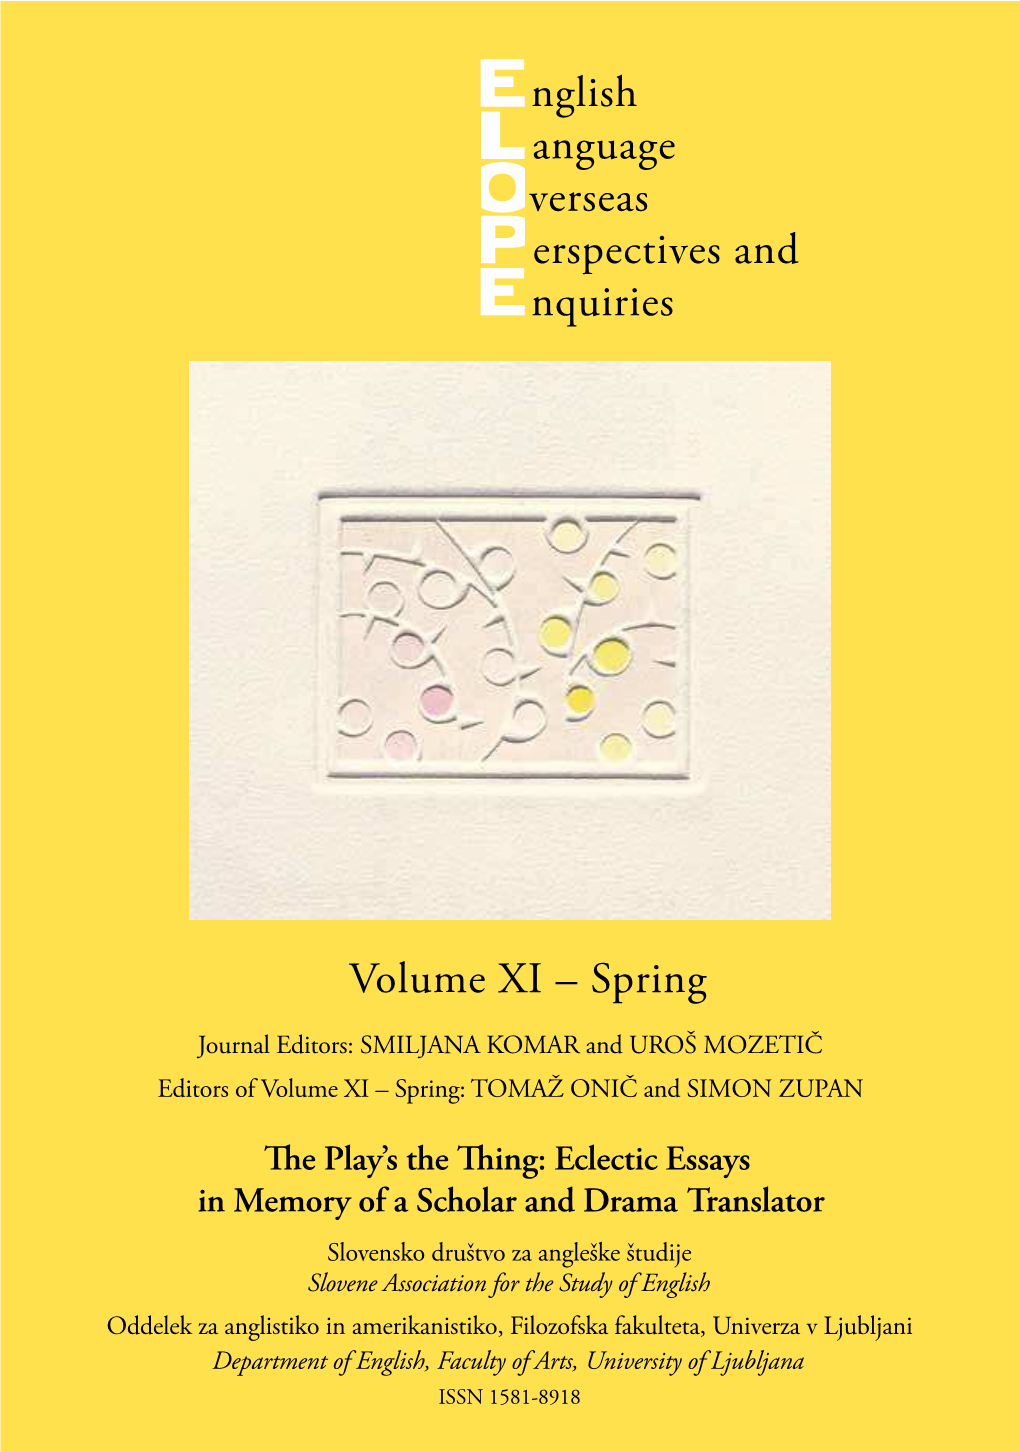 Nglish Anguage Verseas Erspectives and Nquiries Volume XI – Spring